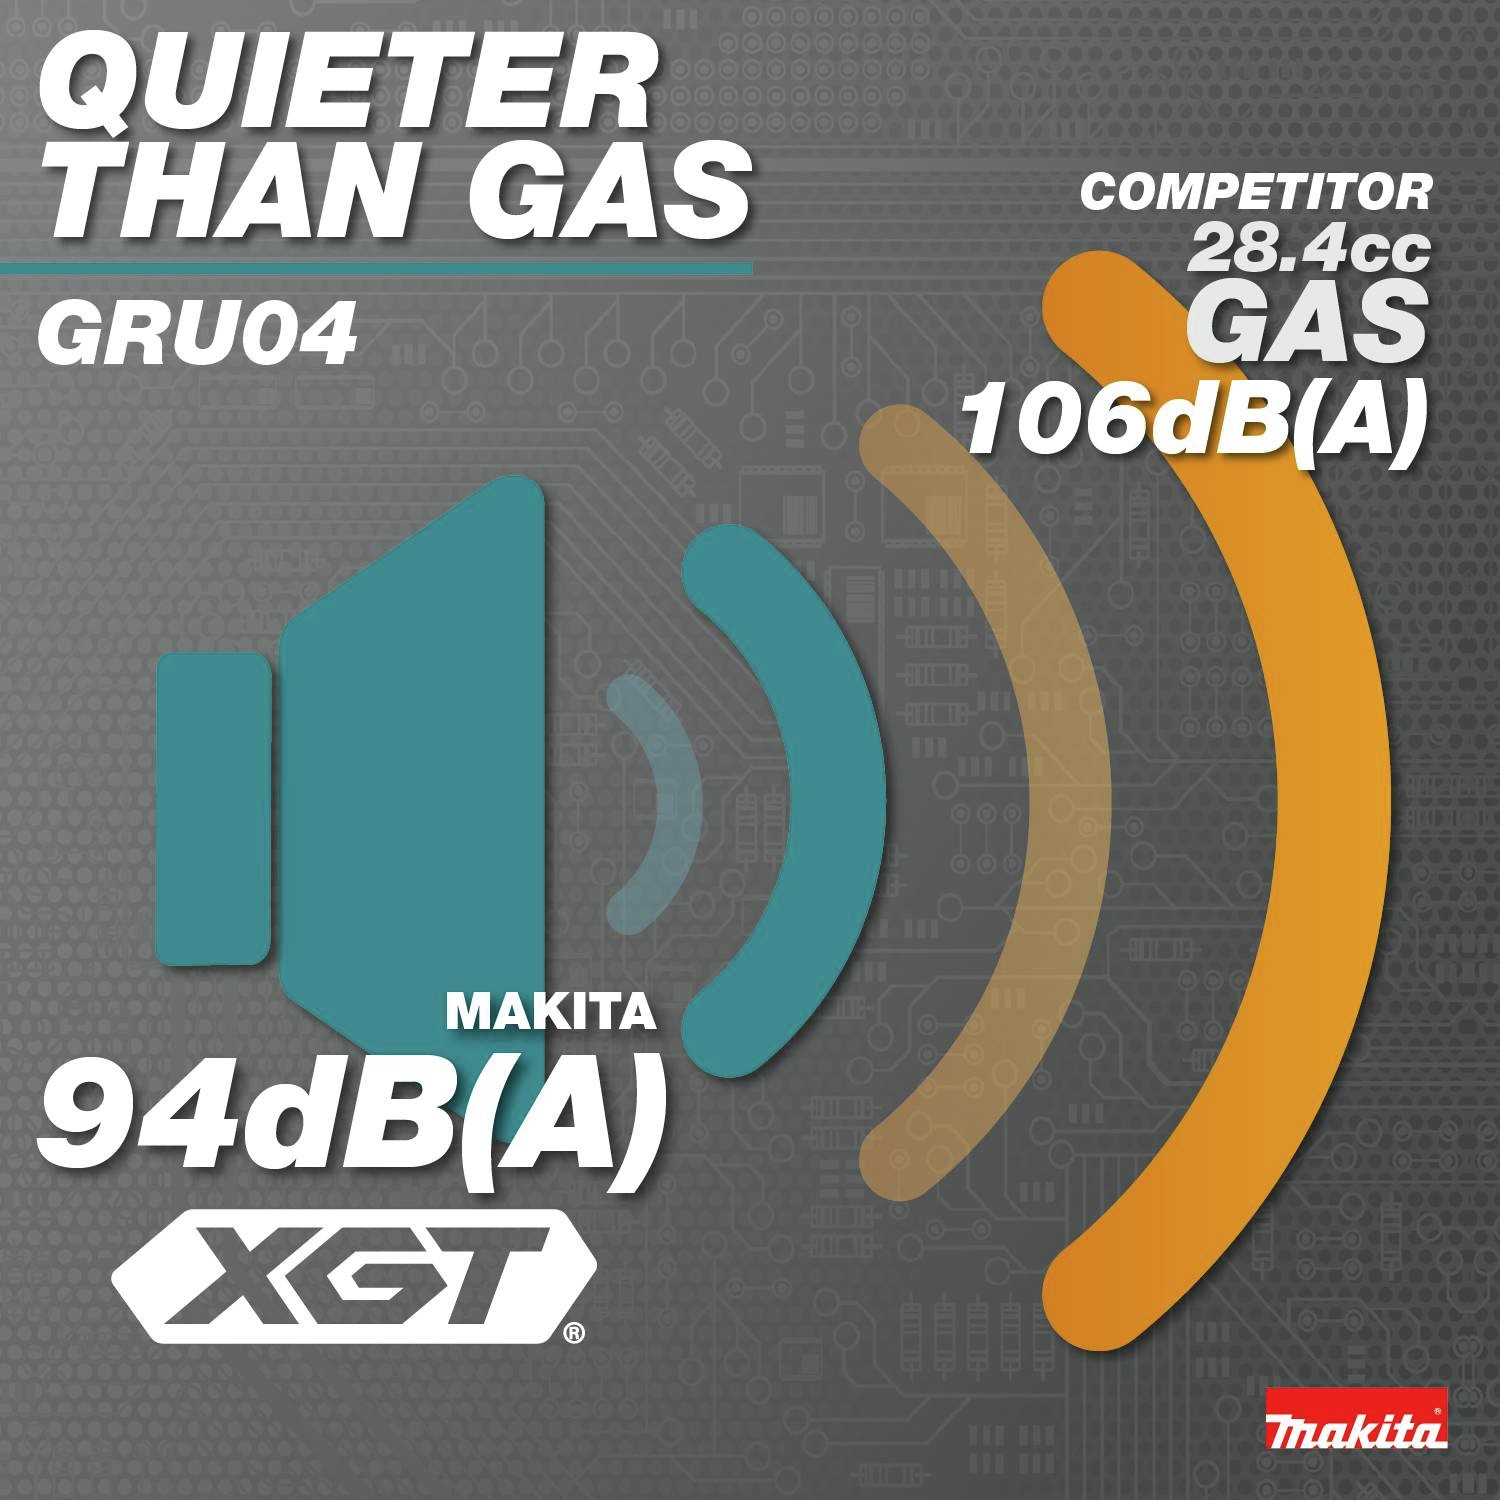 Quieter than Gas: Makita 94 dB(A) vs Competitor 28.4cc Gas 106 dB(A)